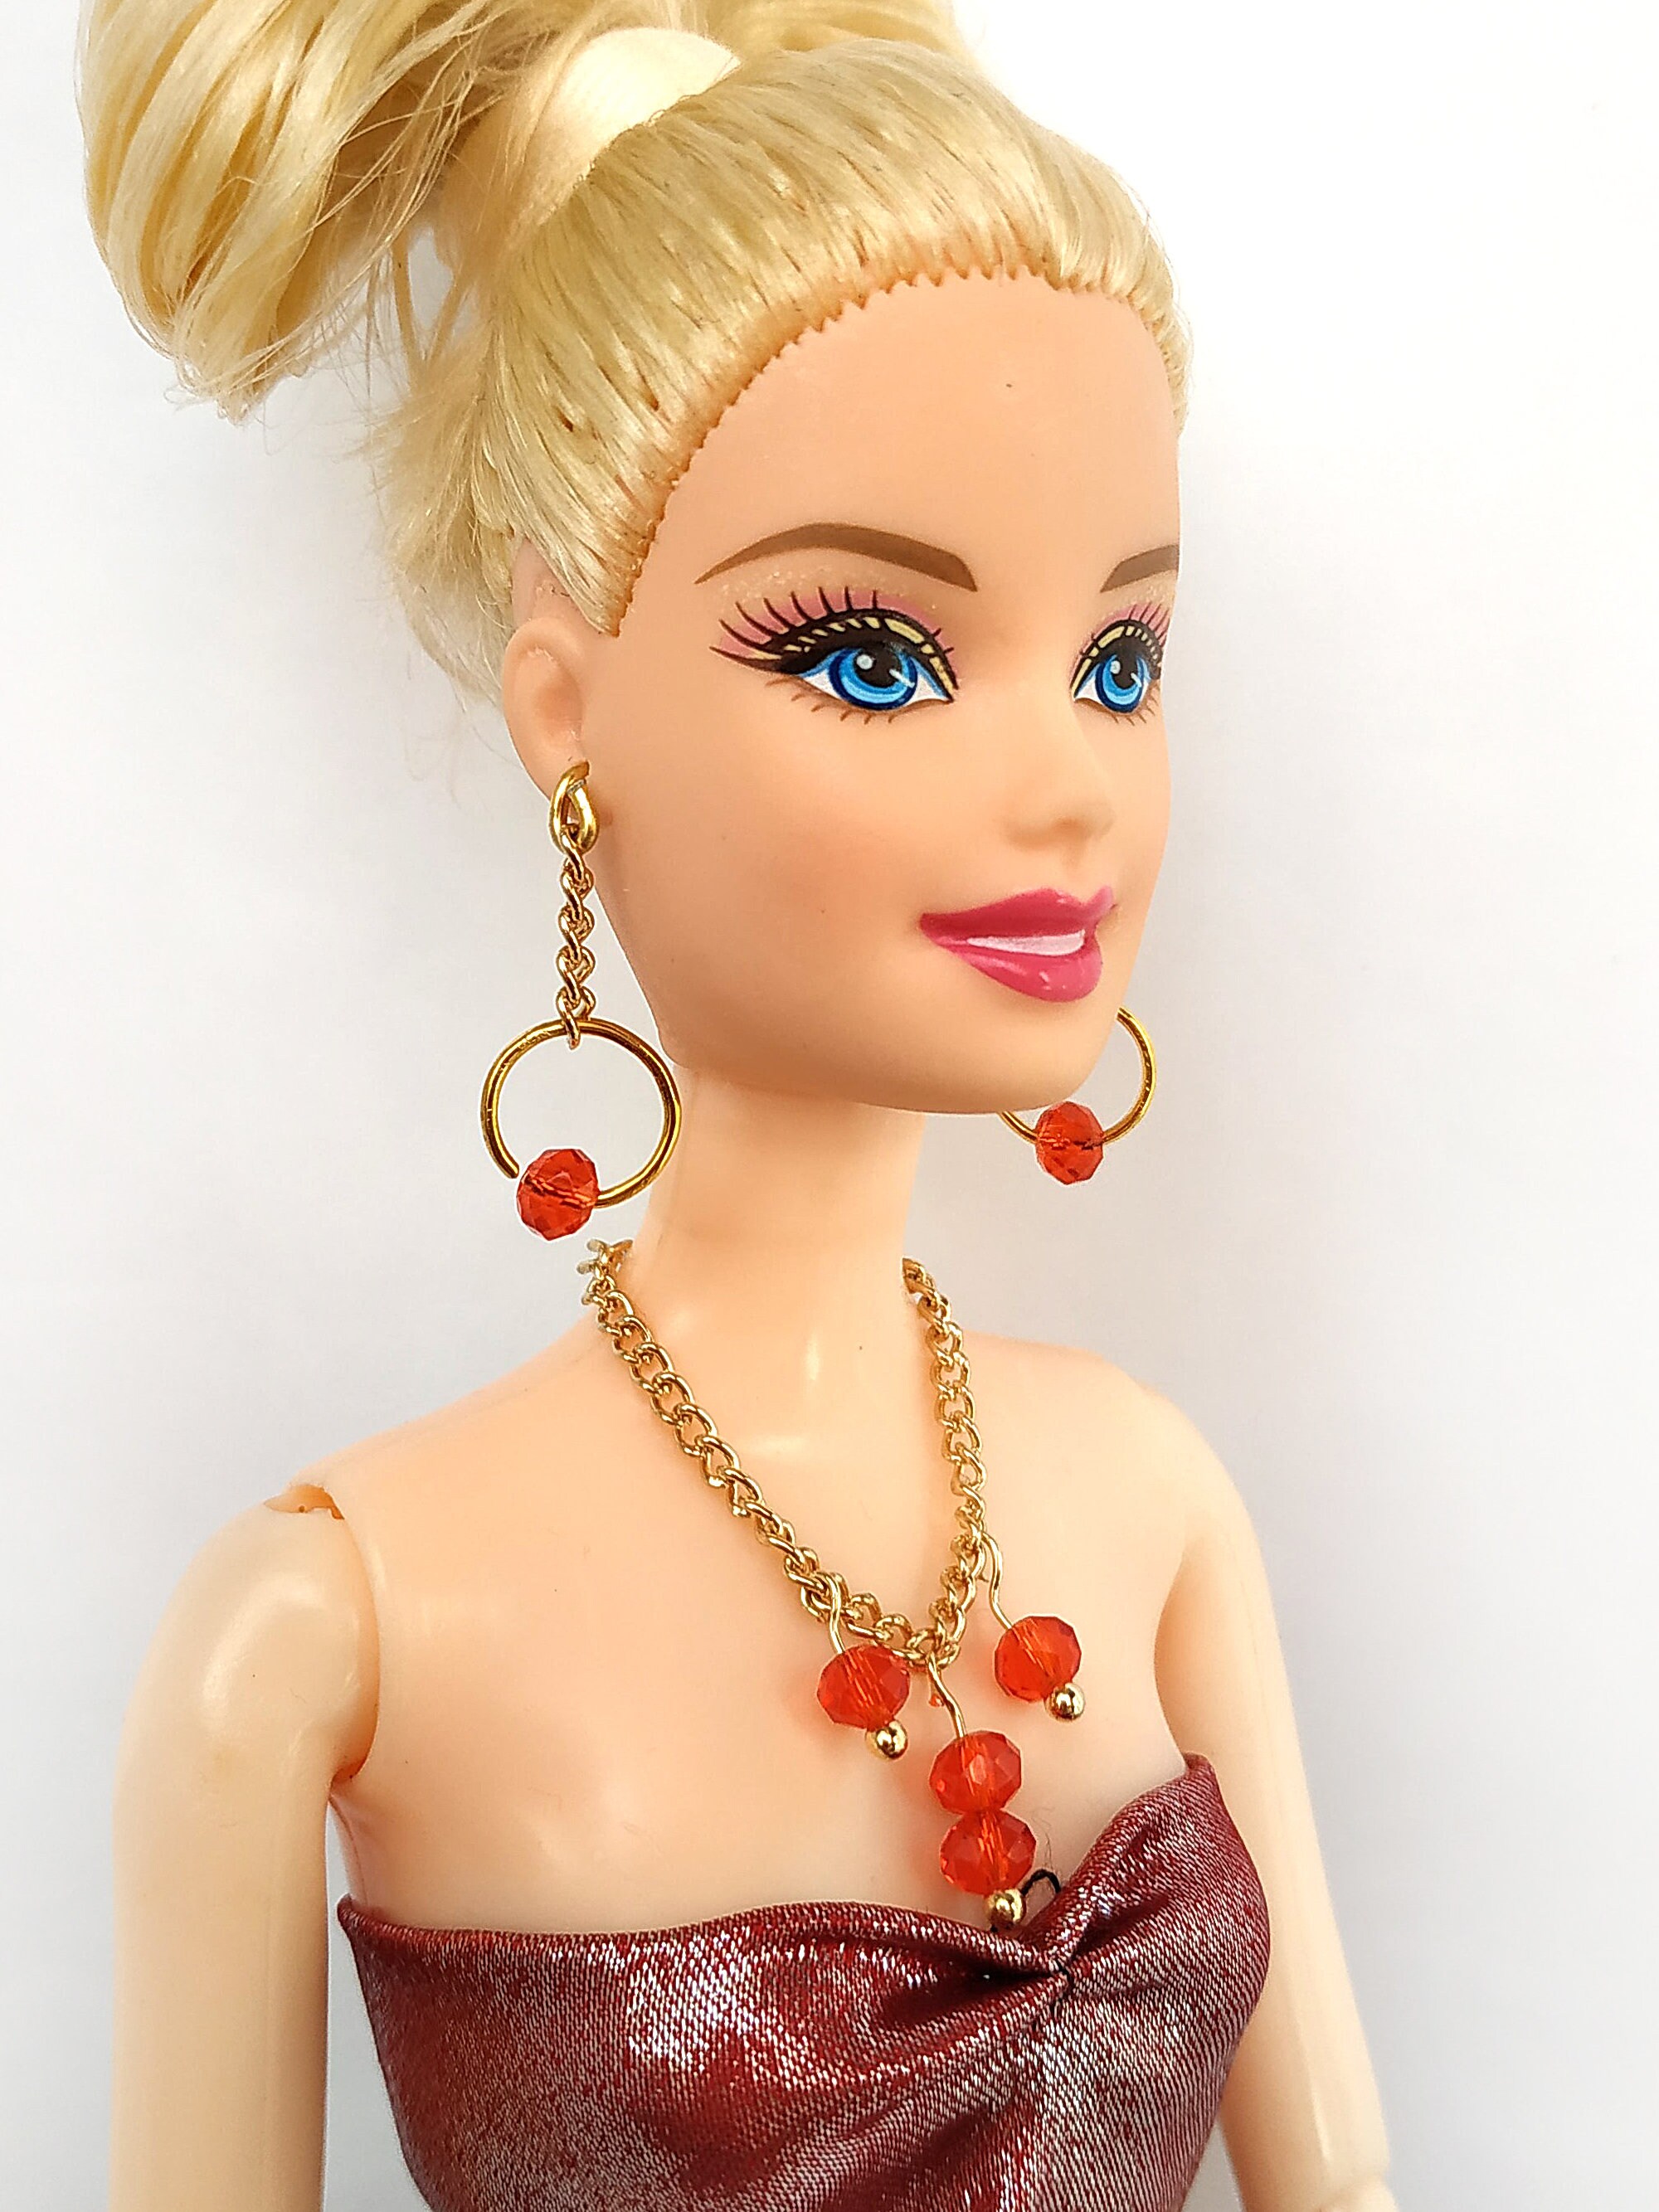 Barbie Doll Vintage Handmade Yellow Stone Necklace Earrings Jewelry Set NE102125